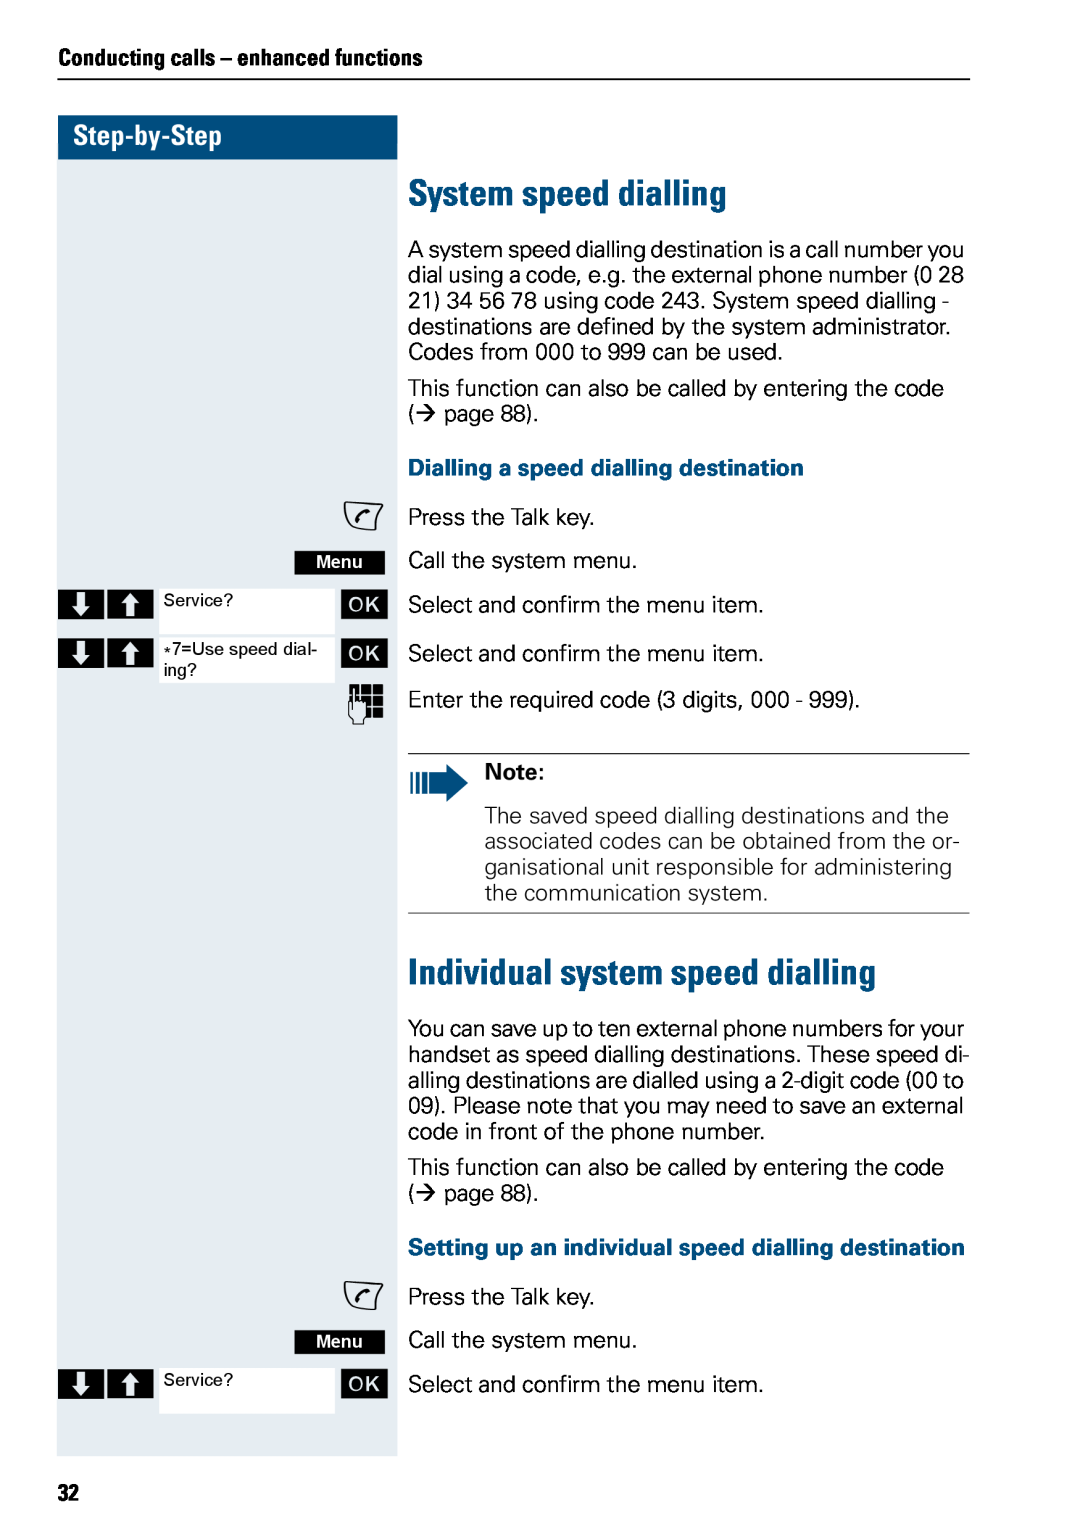 Siemens 3000 V3.0 manual System speed dialling, Individual system speed dialling, Step-by-Step 